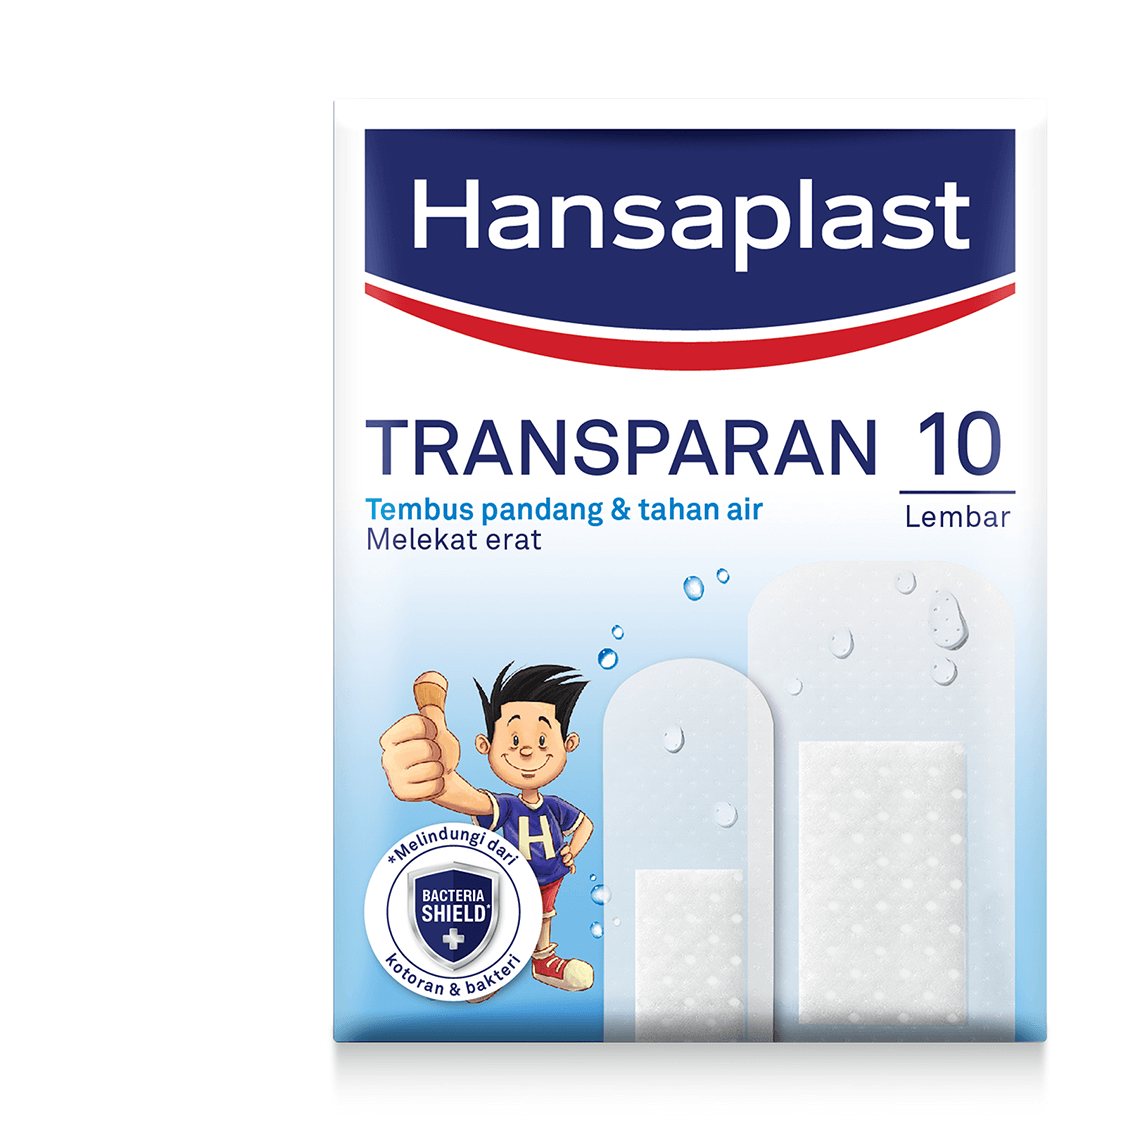 Hansaplast Transparan 10 Lembar